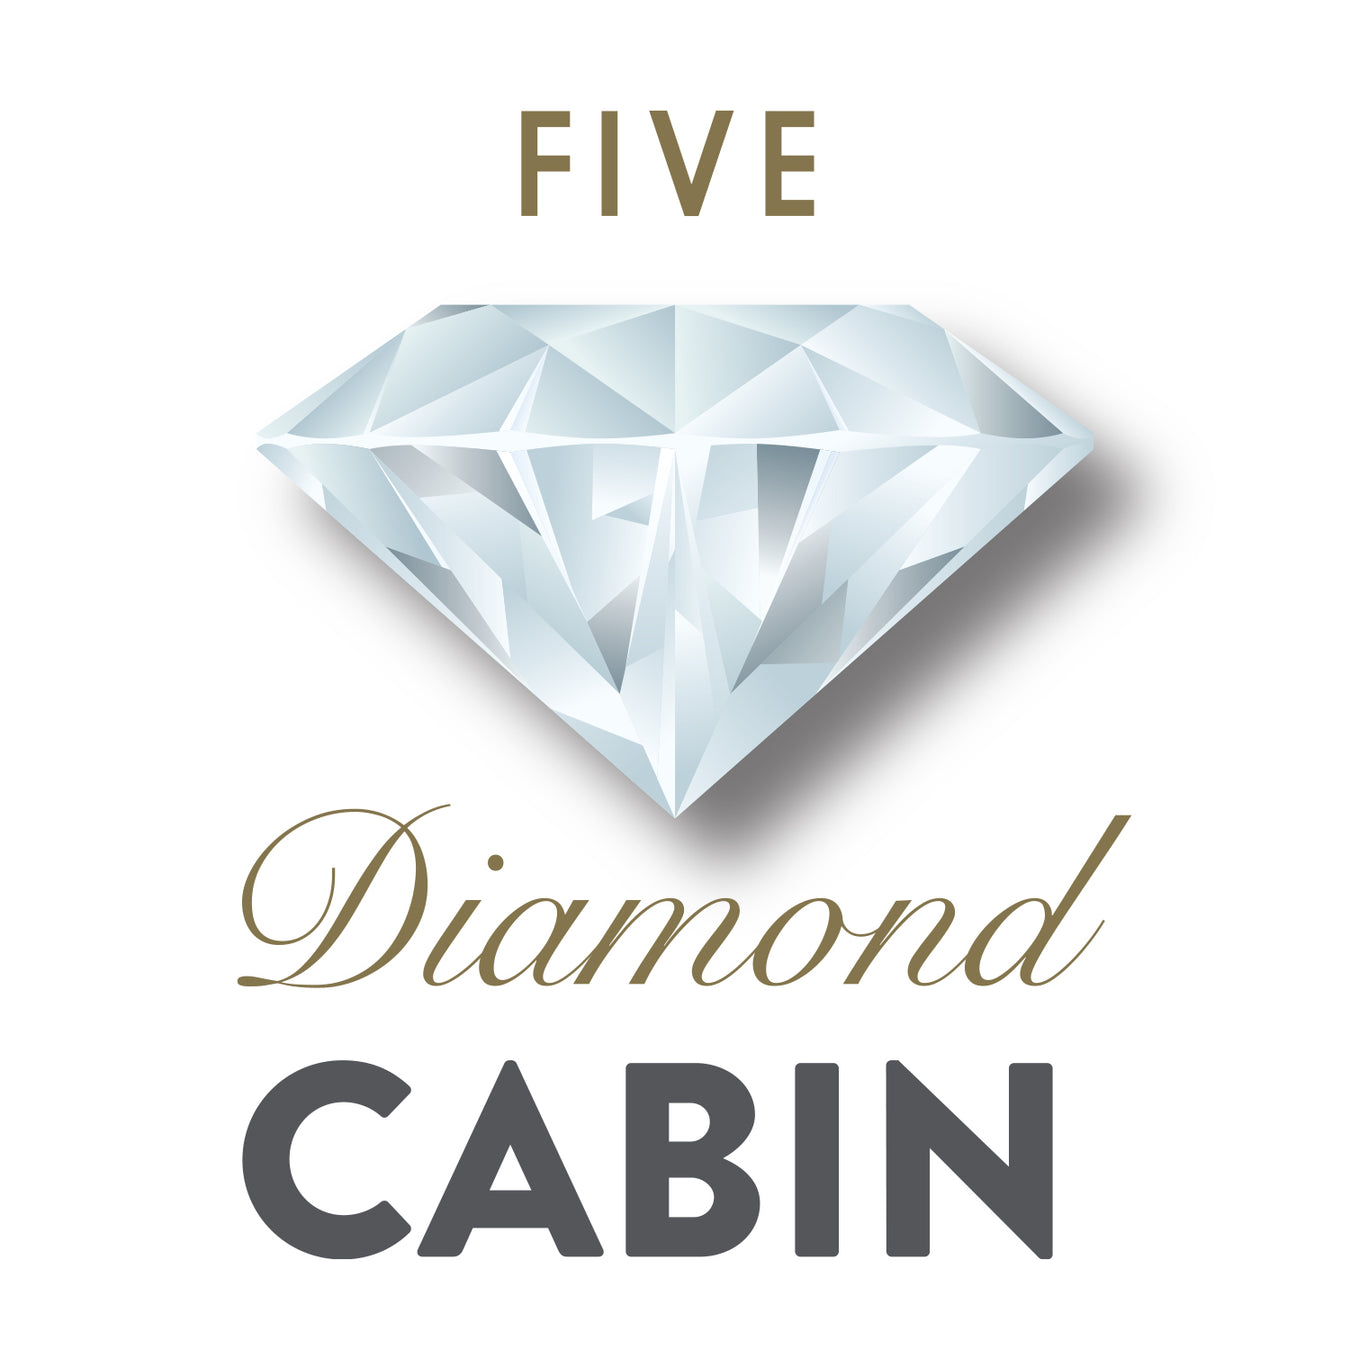 Five Diamond: Cabin